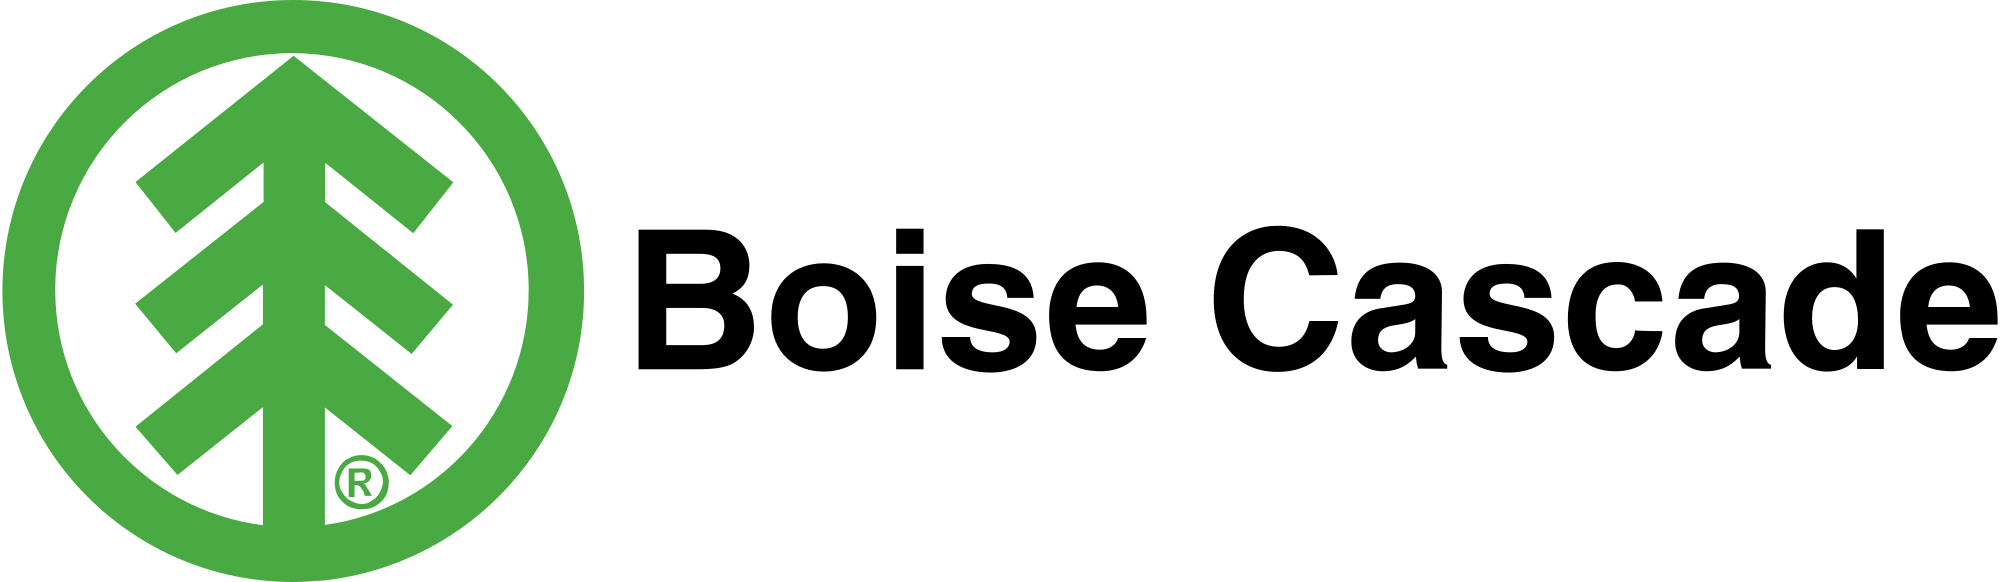 2000px-Boise_Cascade_logo